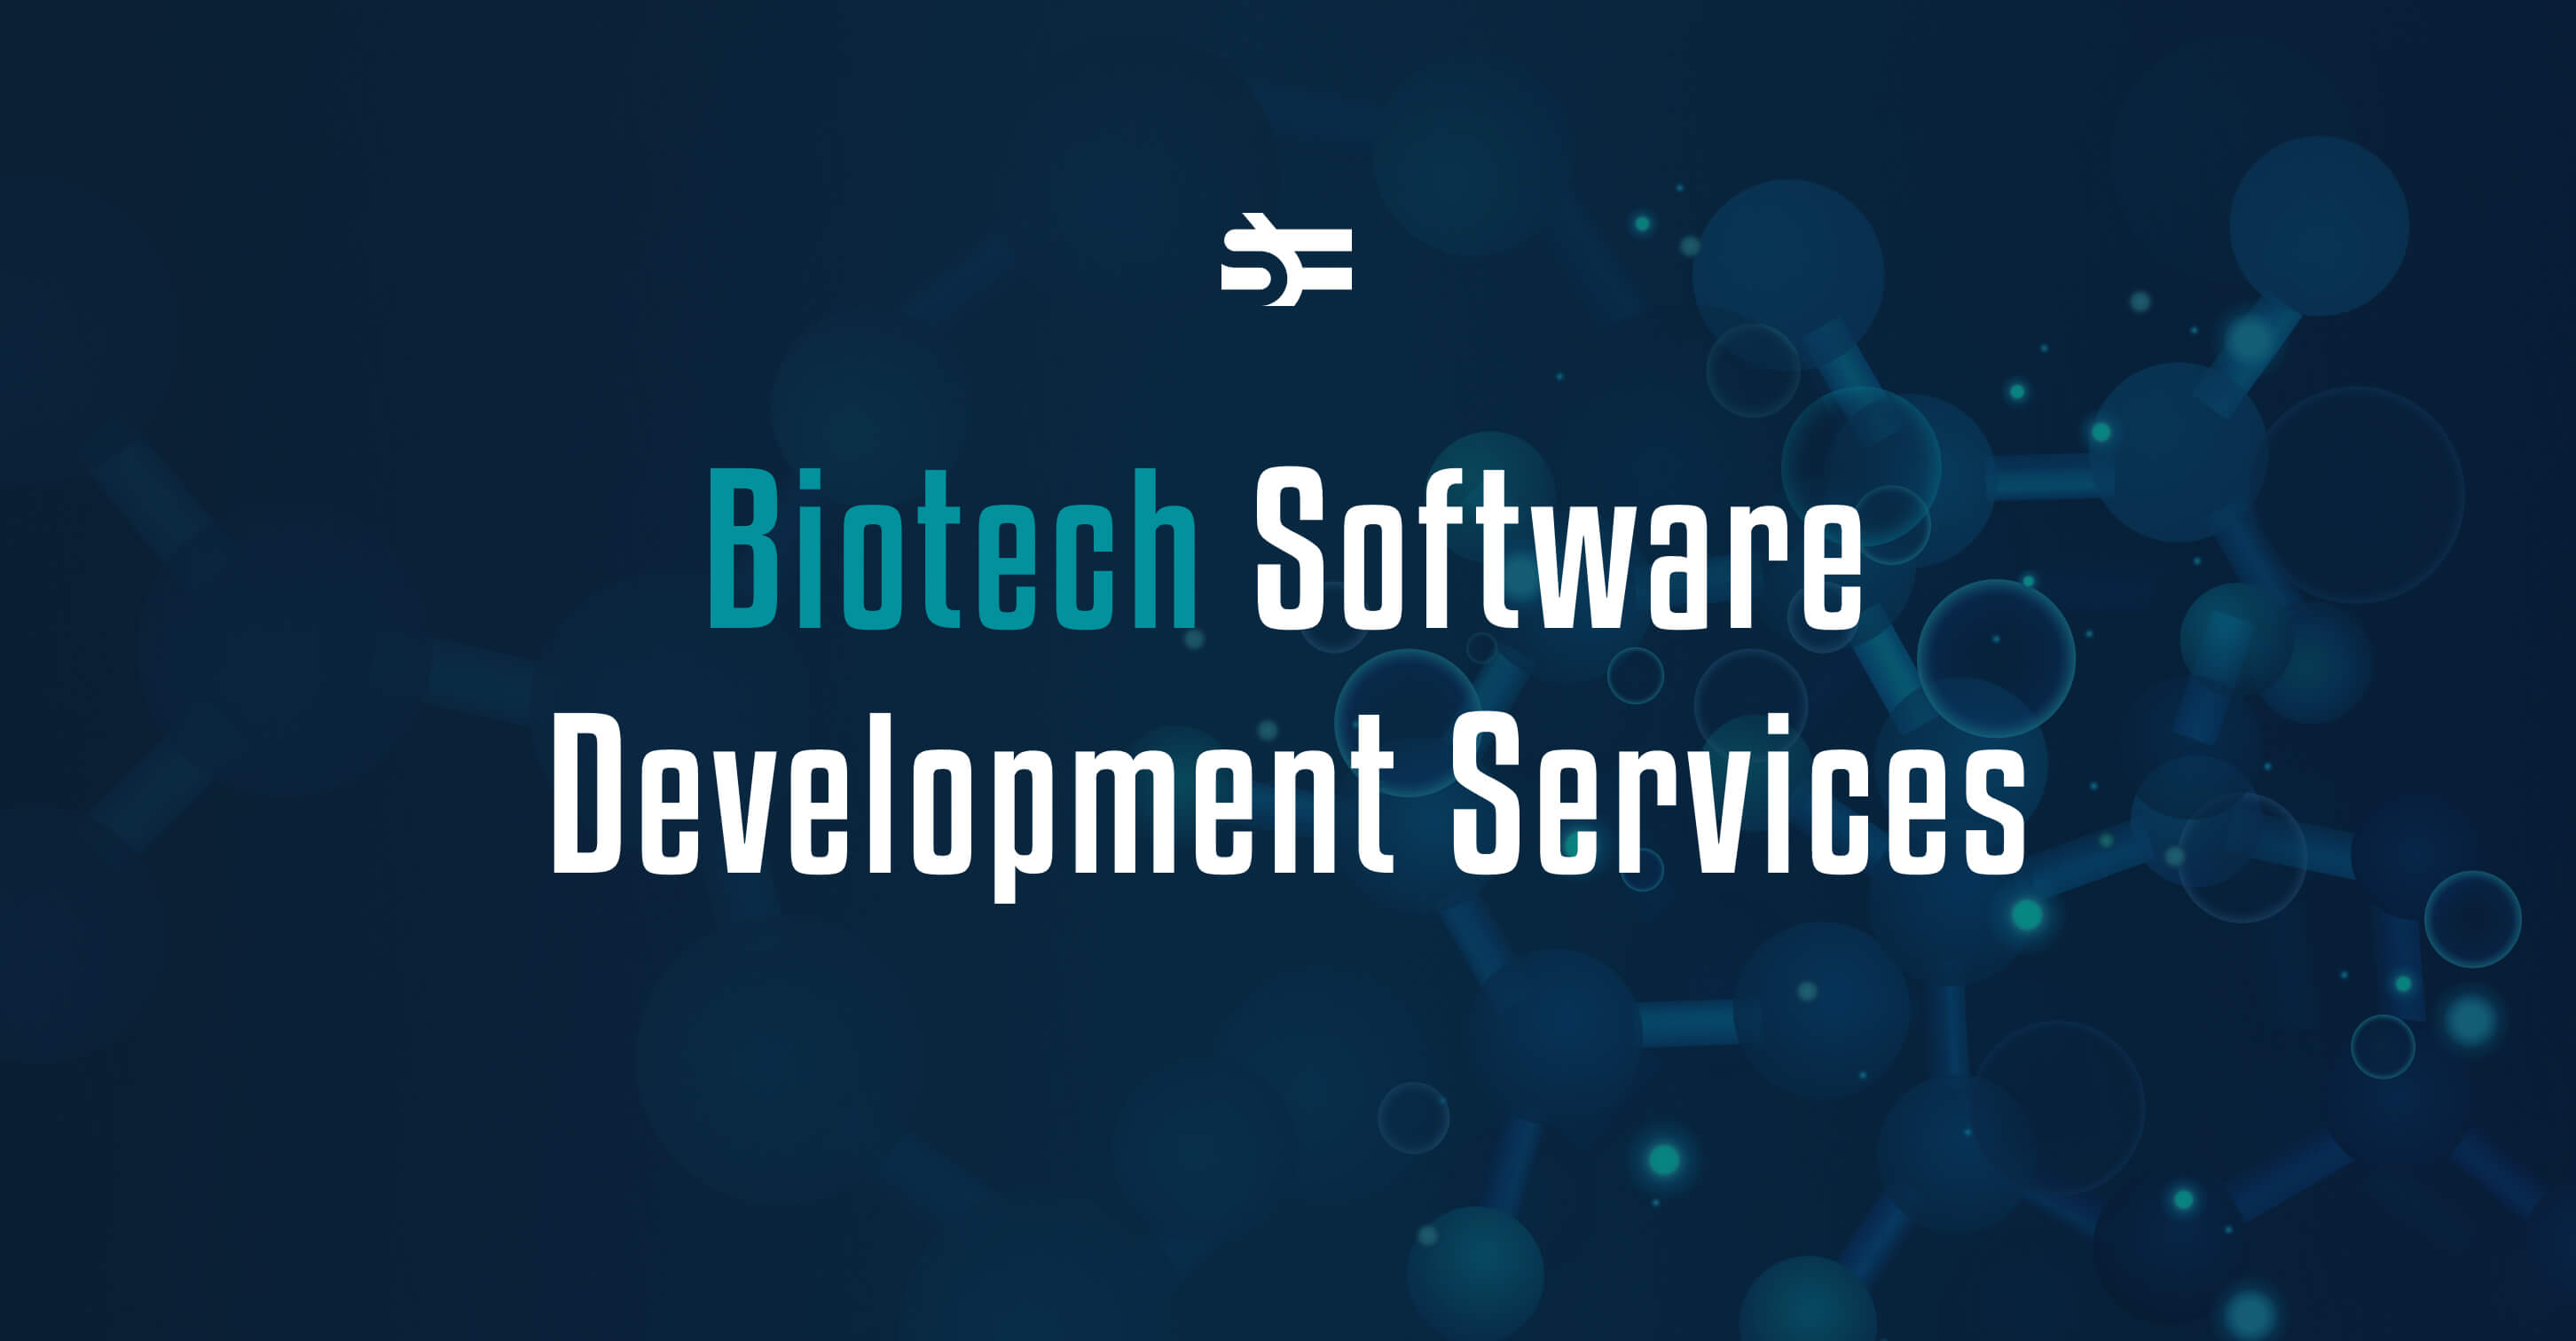 Biotech Software Development Company Serokell